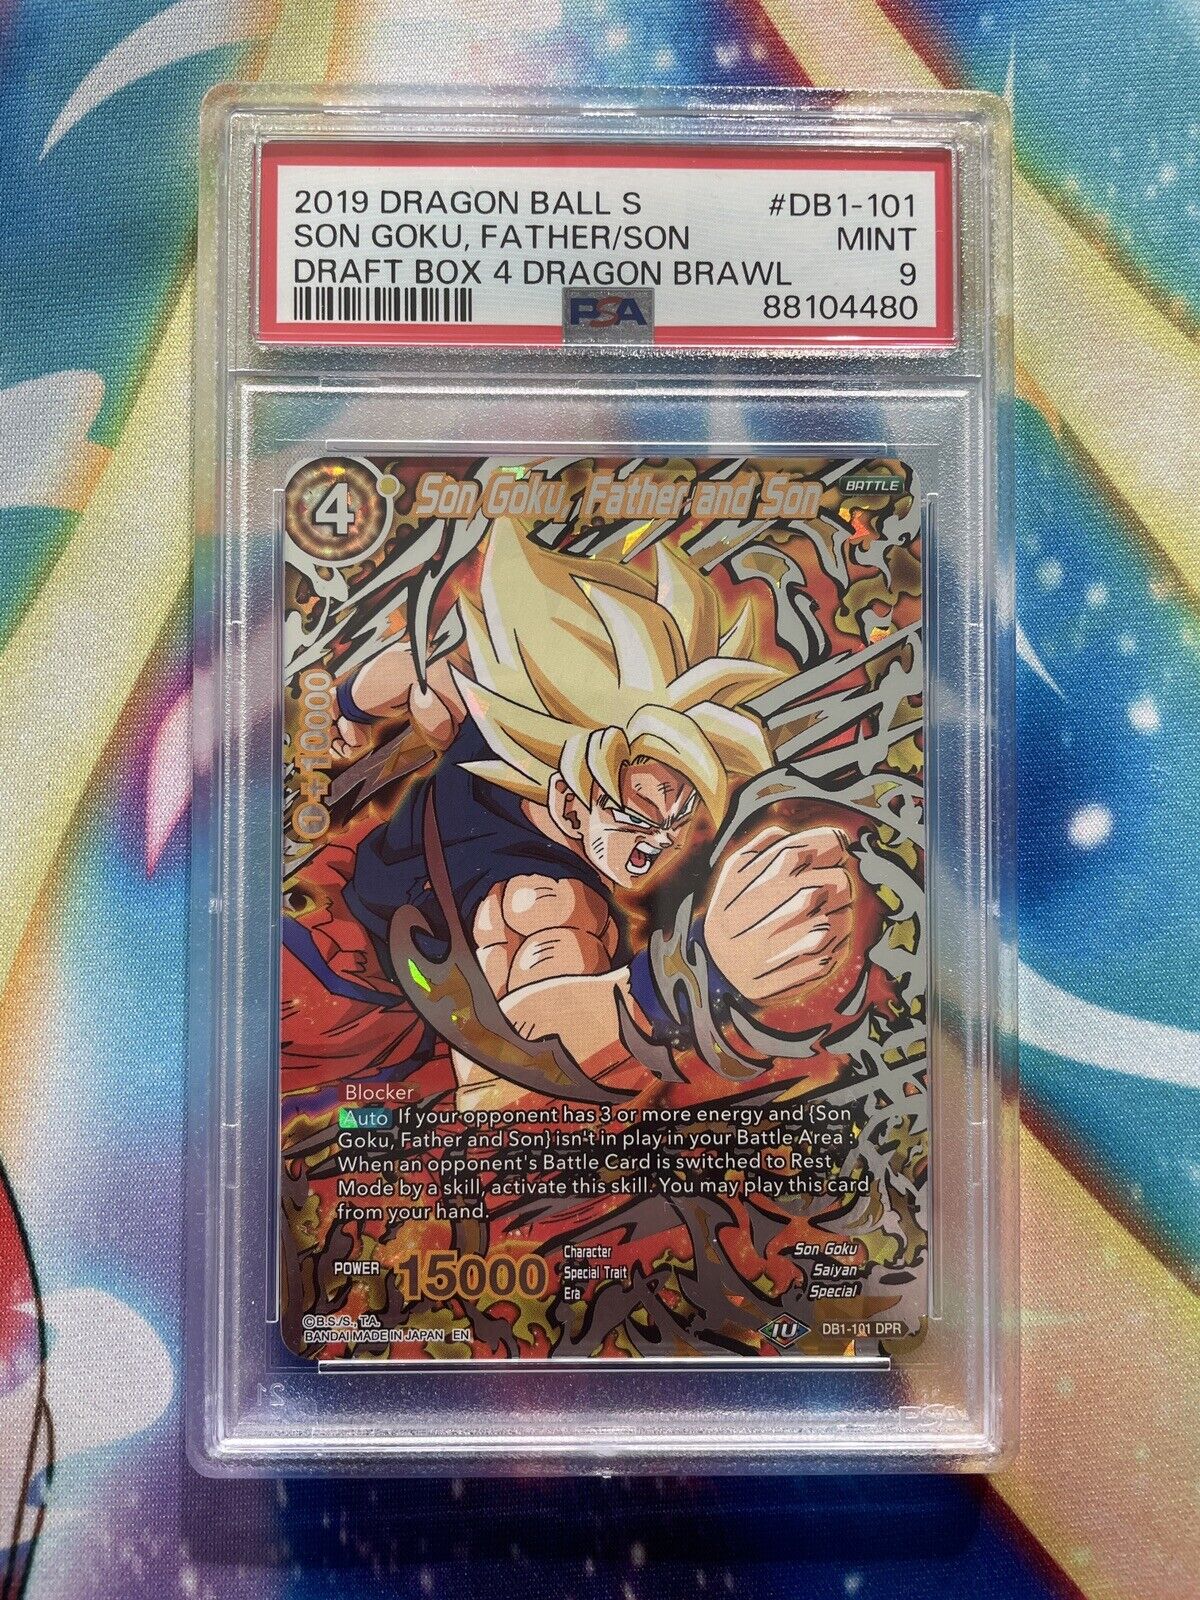 Son Goku Father and Son DPR PSA 9 Mint | DBS Draft Box 4 Dragon Brawl DB1-101